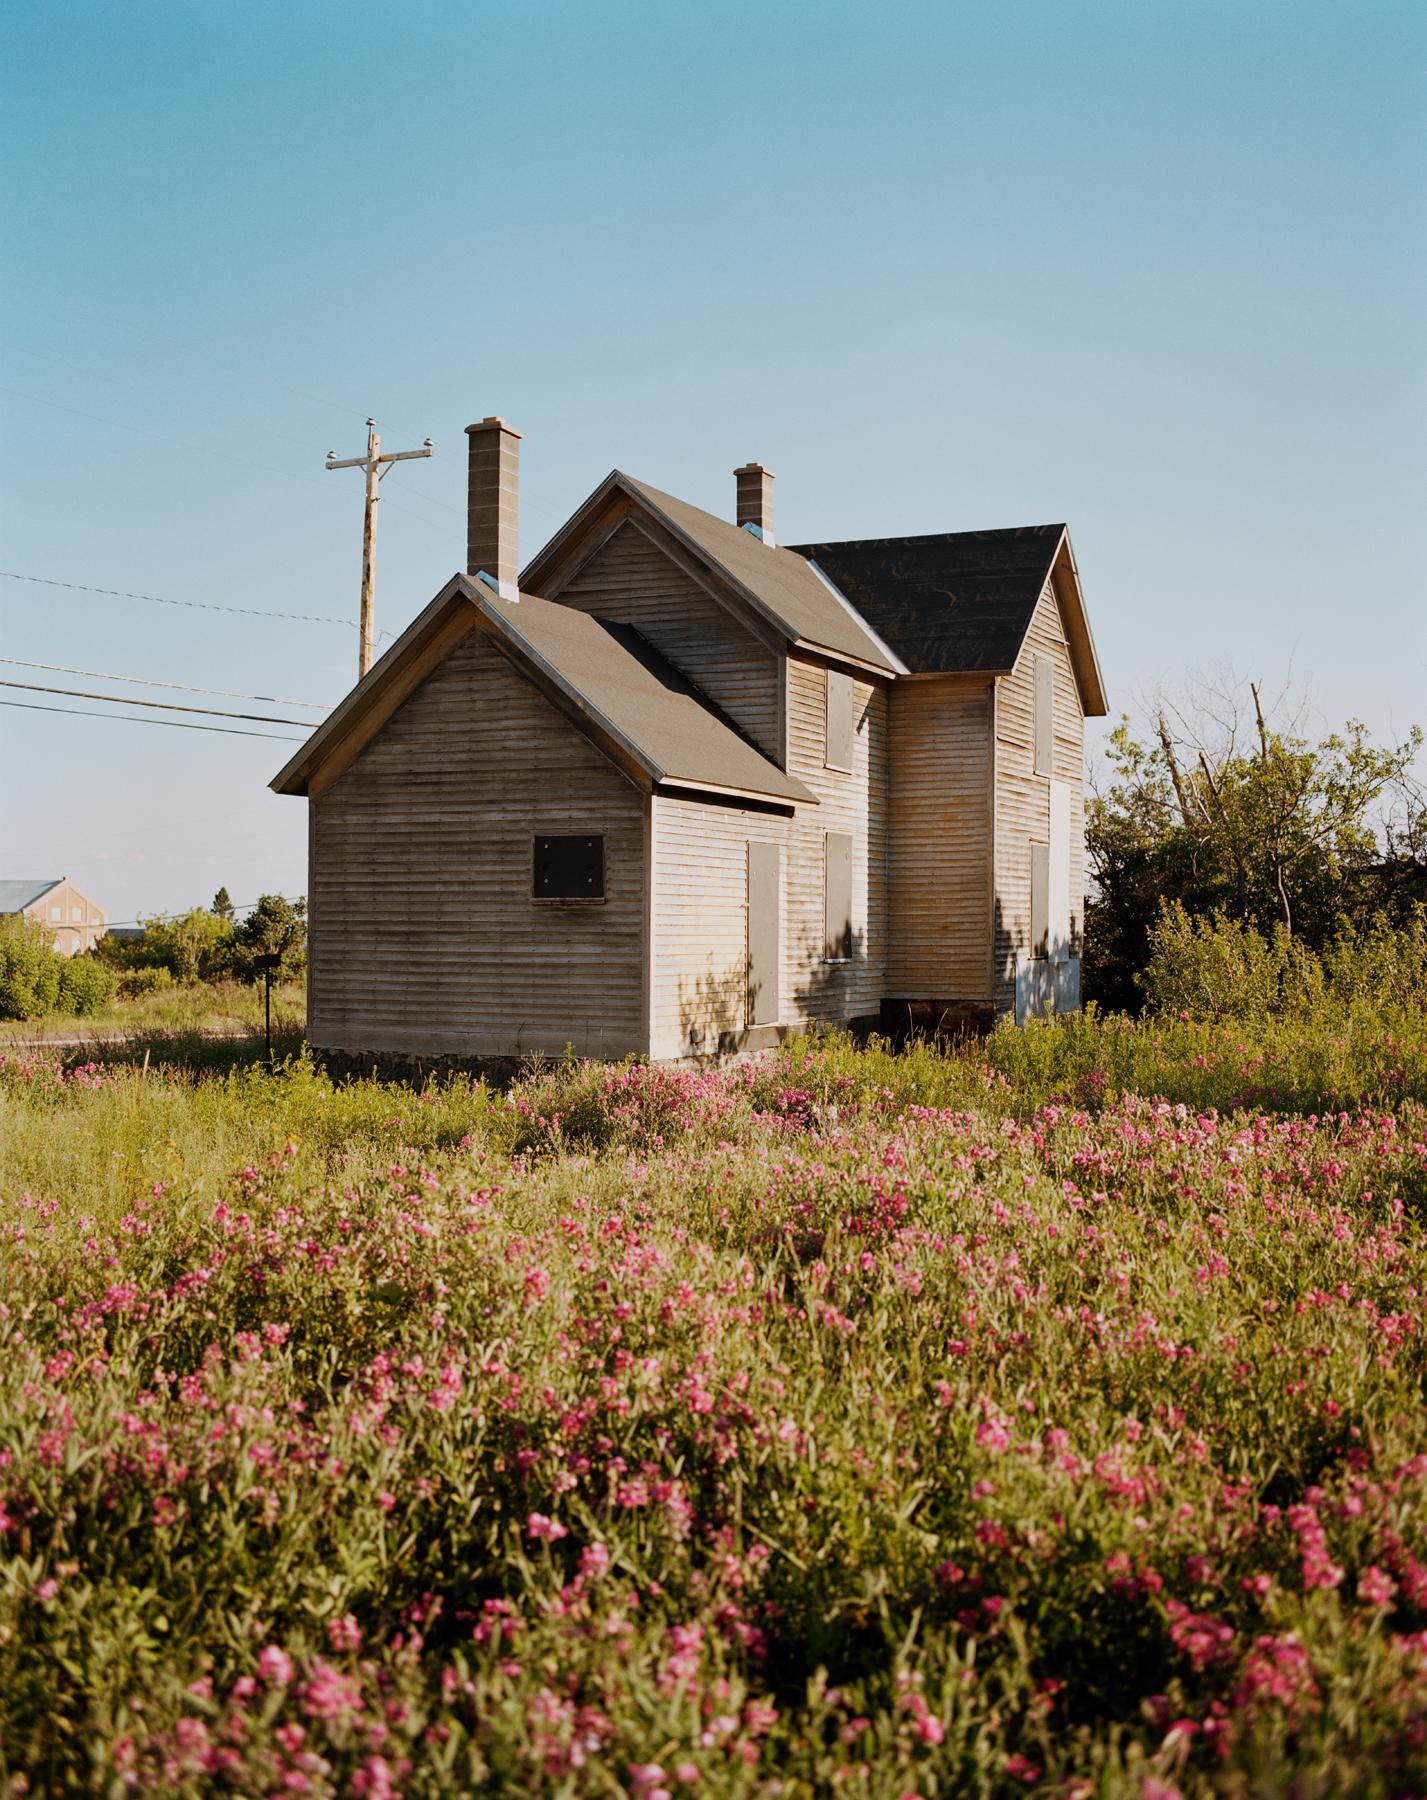 Gregory Halpern Color Photograph – Omaha-Sketchbuch: House in Field, 2005-2018 - Zeitgenössische Fotografie, amerikanisch